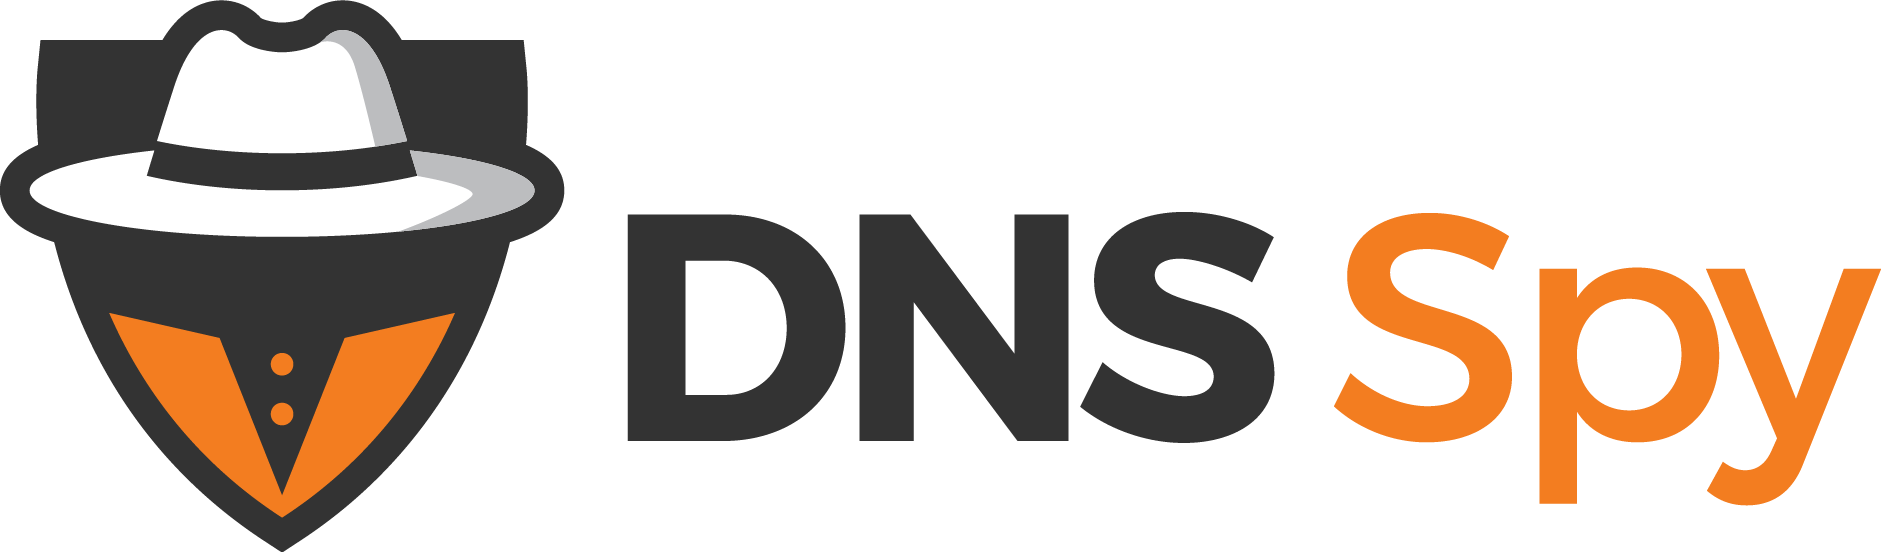 DNS Spy logo